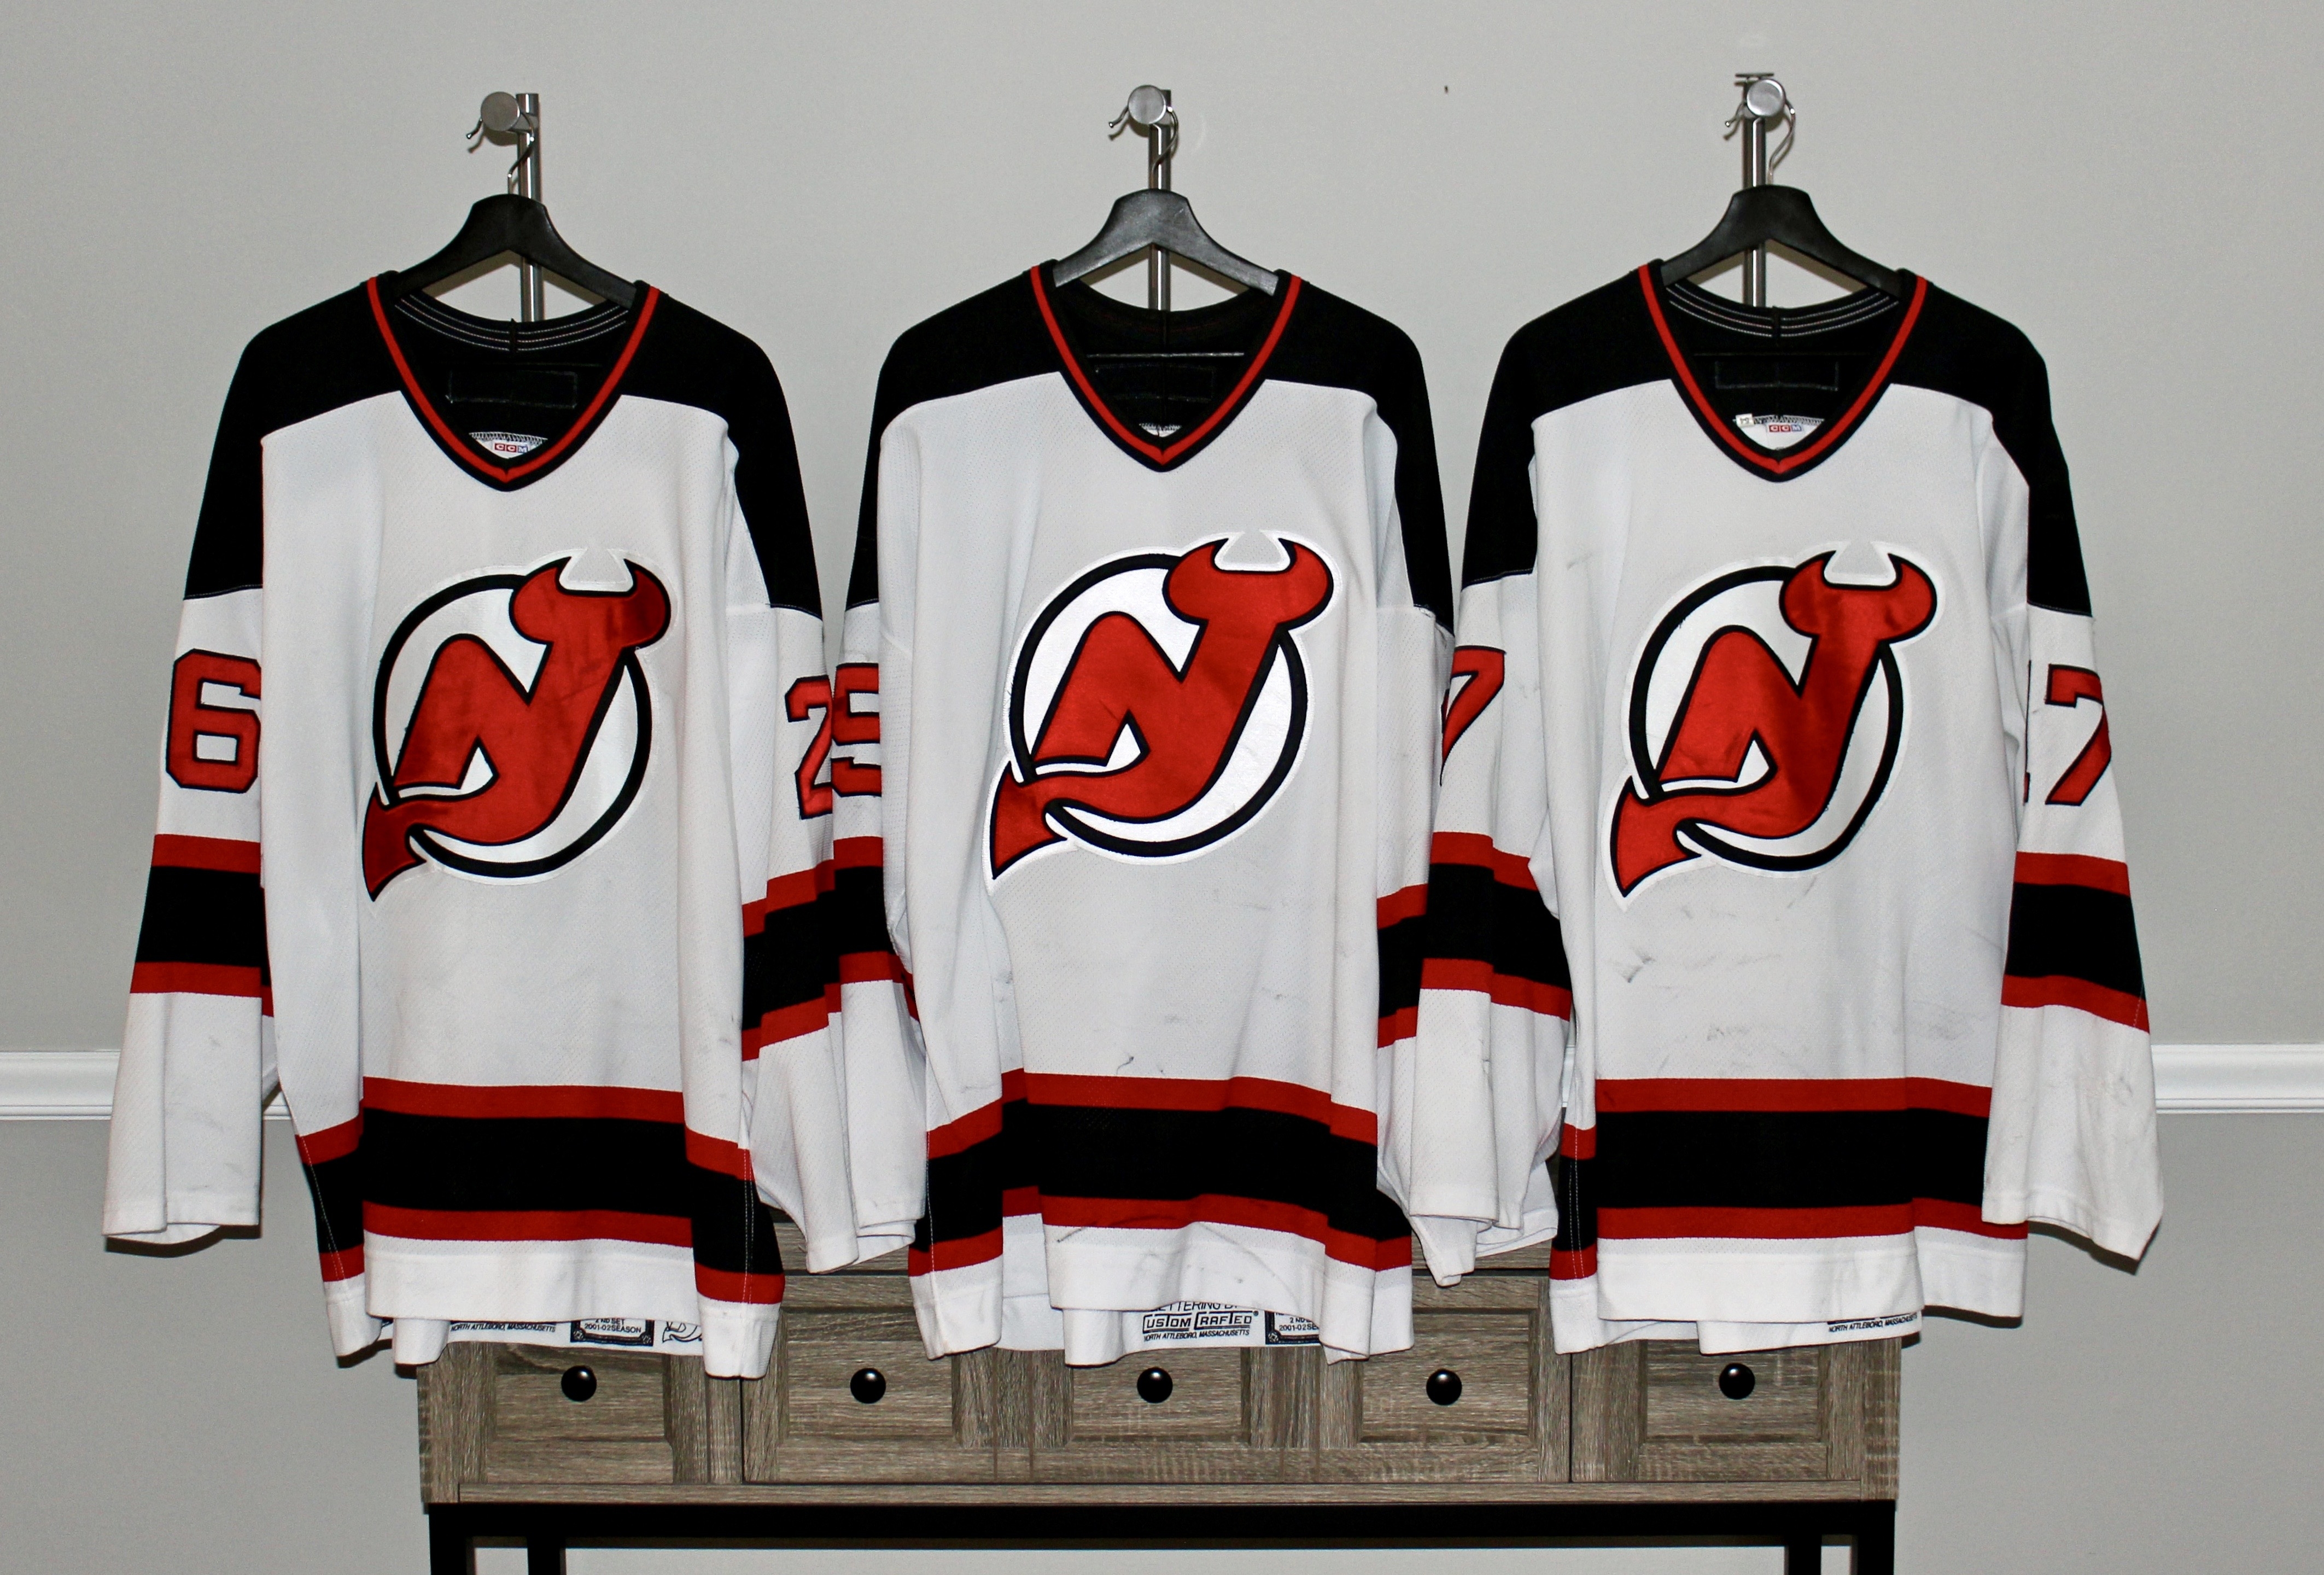 cheap hockey jerseys New Jersey 23 David Clarkson Ice Hockey Jersey Home  Red/Black White and third Red/Green - AliExpress